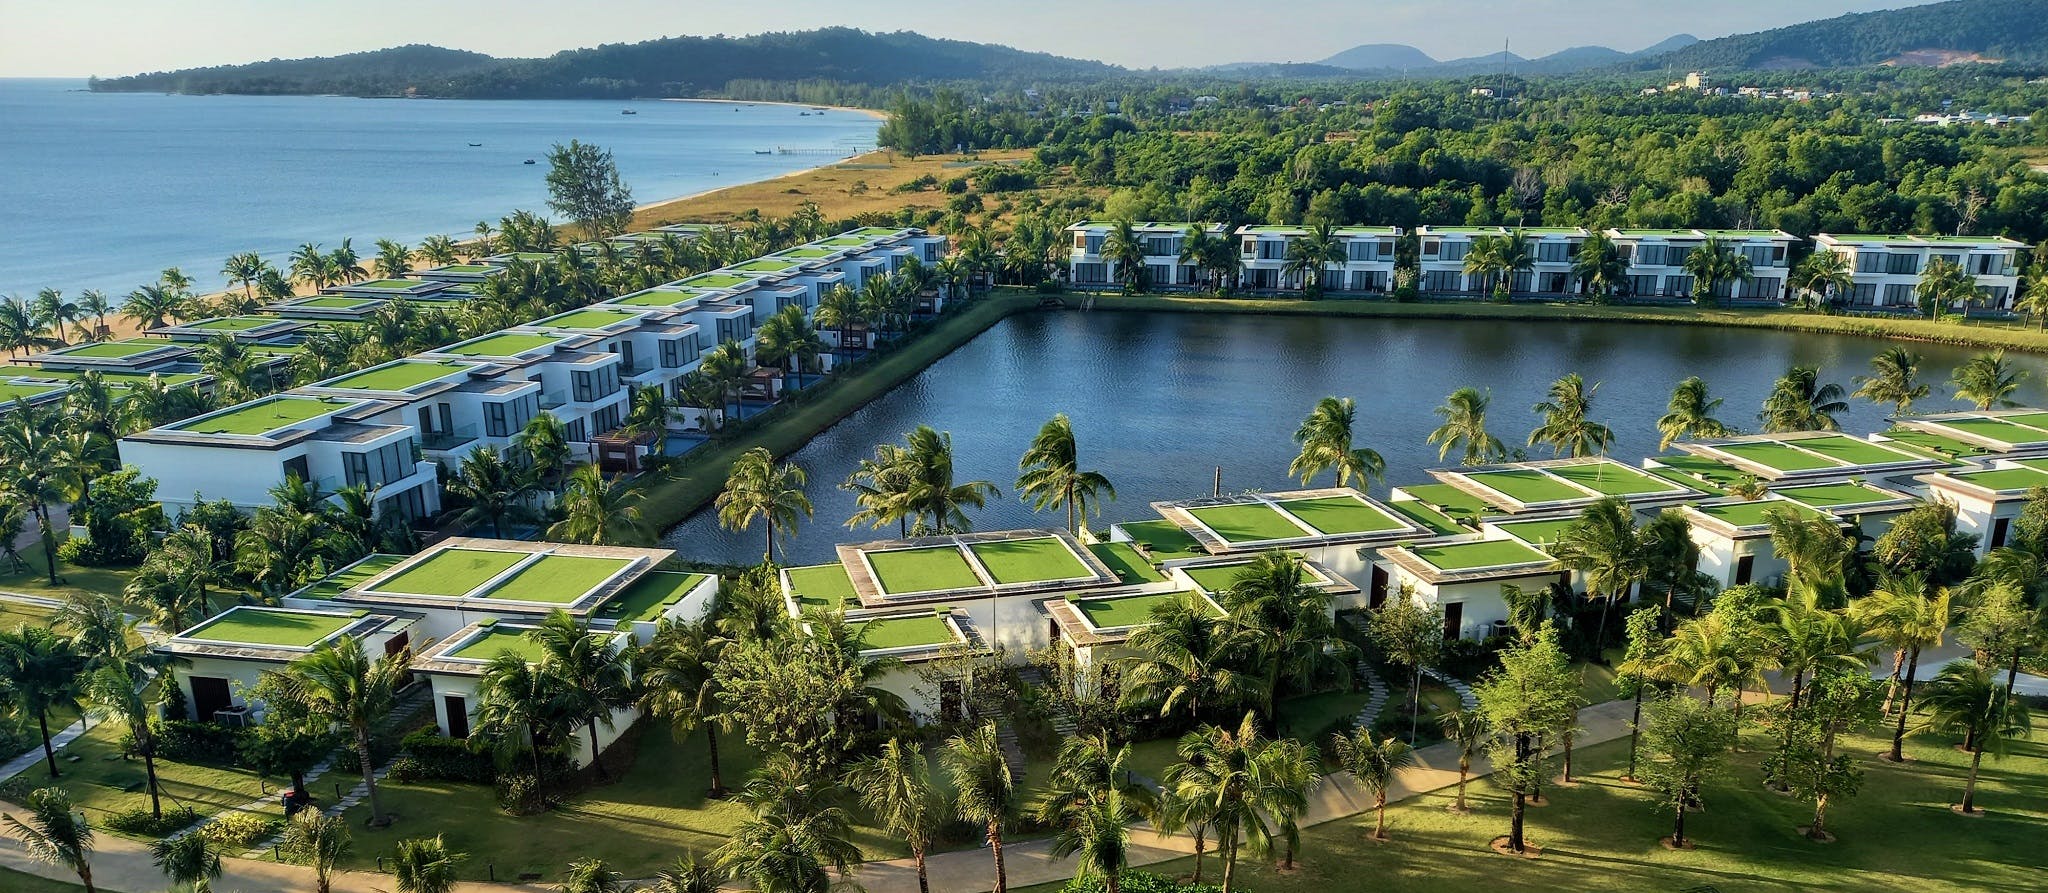 Mövenpick Resort Waverly Phu Quoc, Independent Review, Vietnam